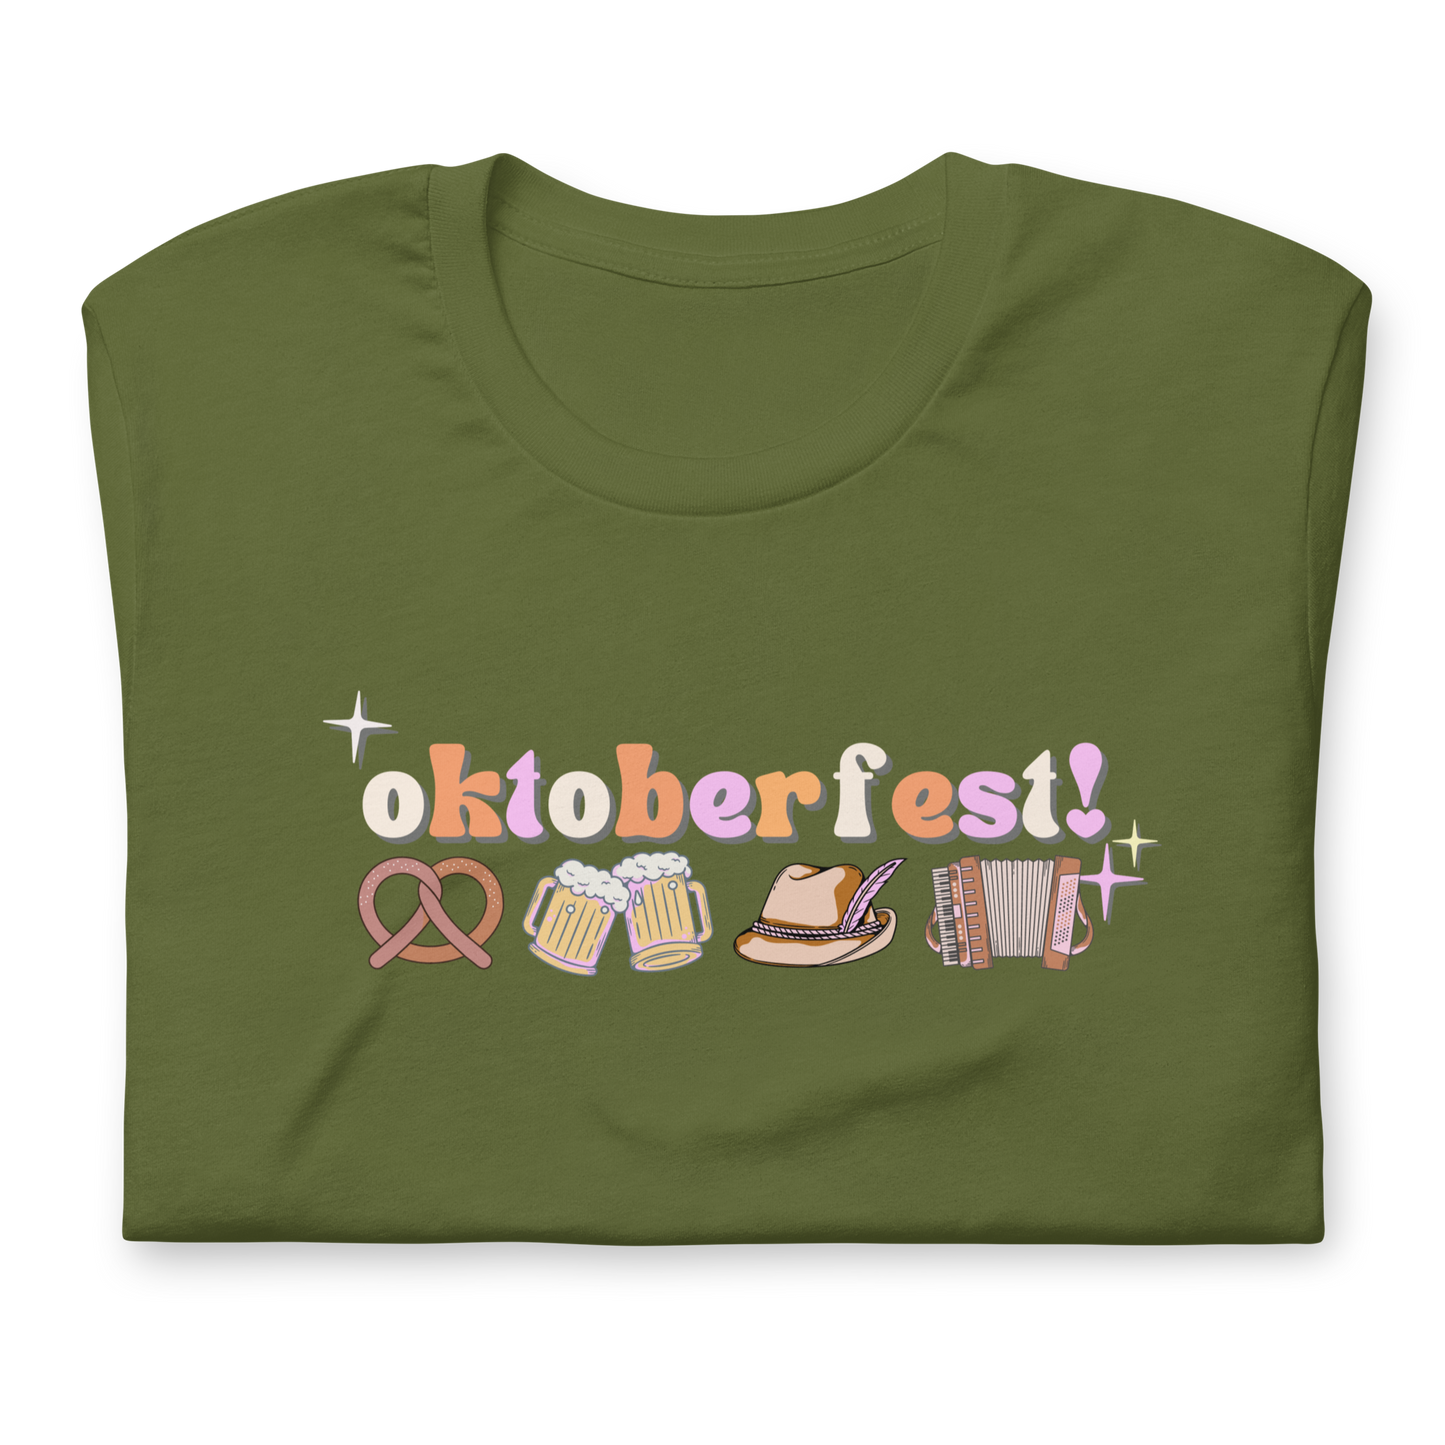 Bavarian Delight Oktoberfest T-Shirt: Pretzels, Beer, and Fun!